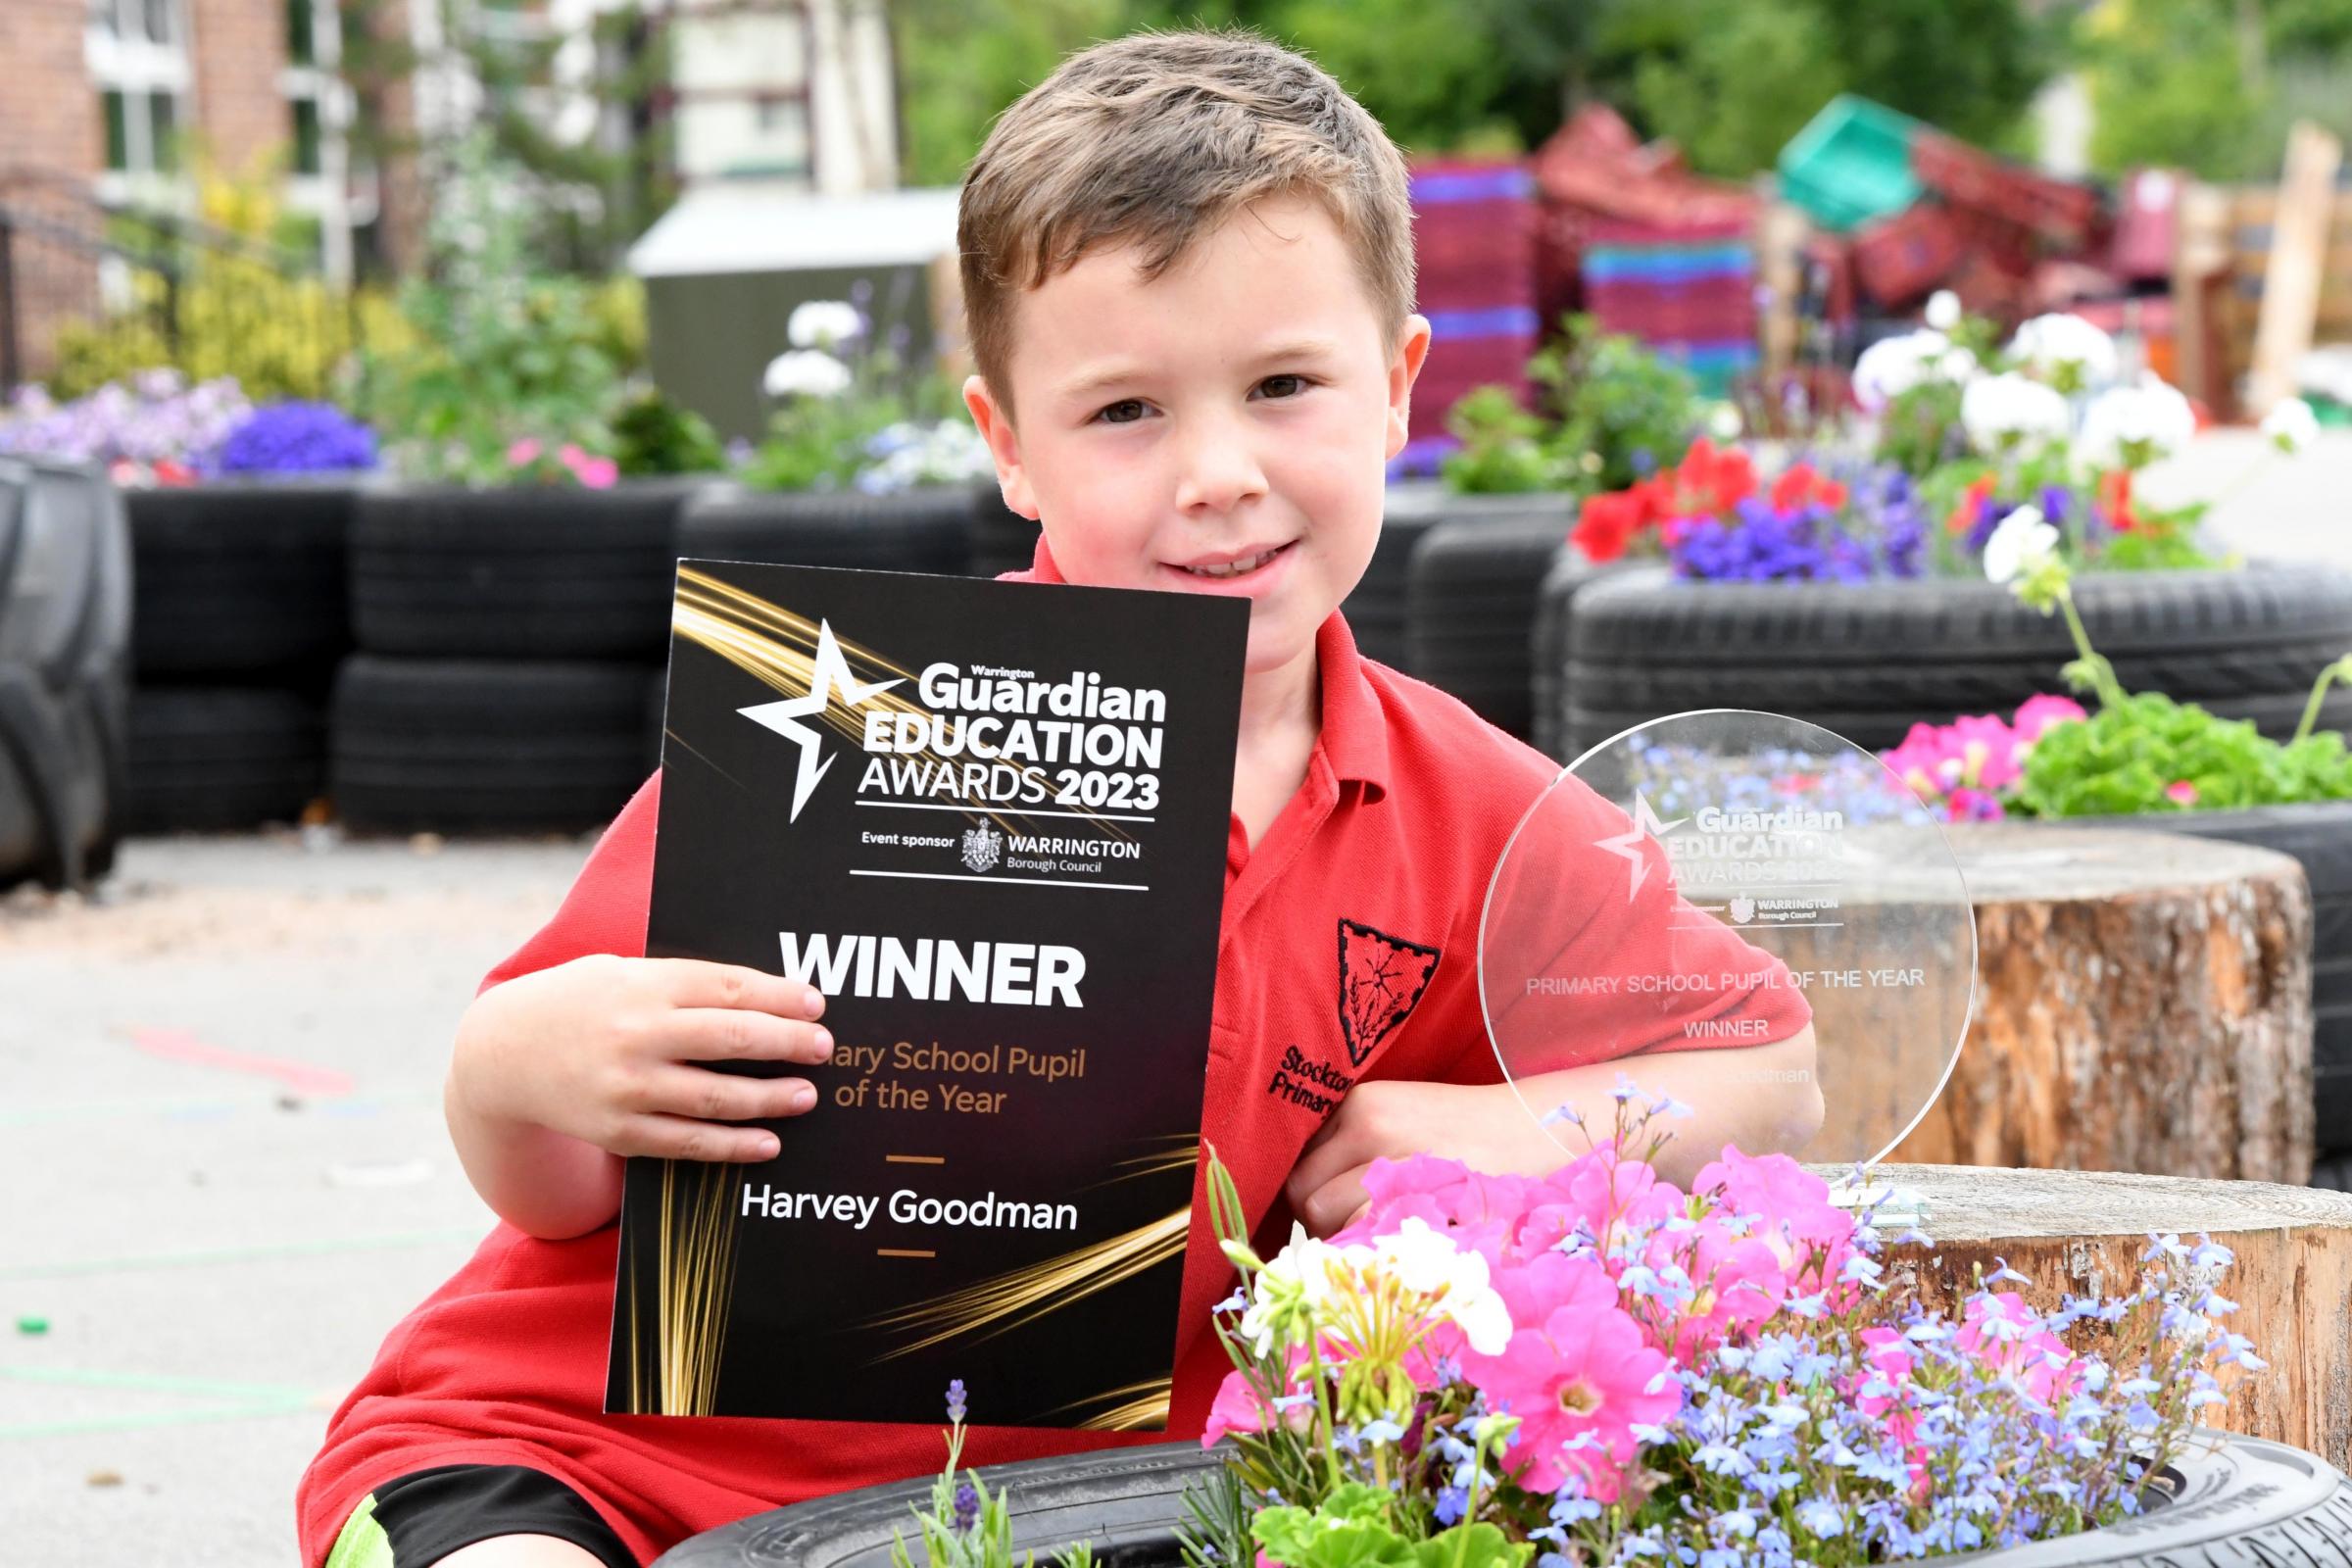 Primary School Pupil of the Year - Harvey Goodman